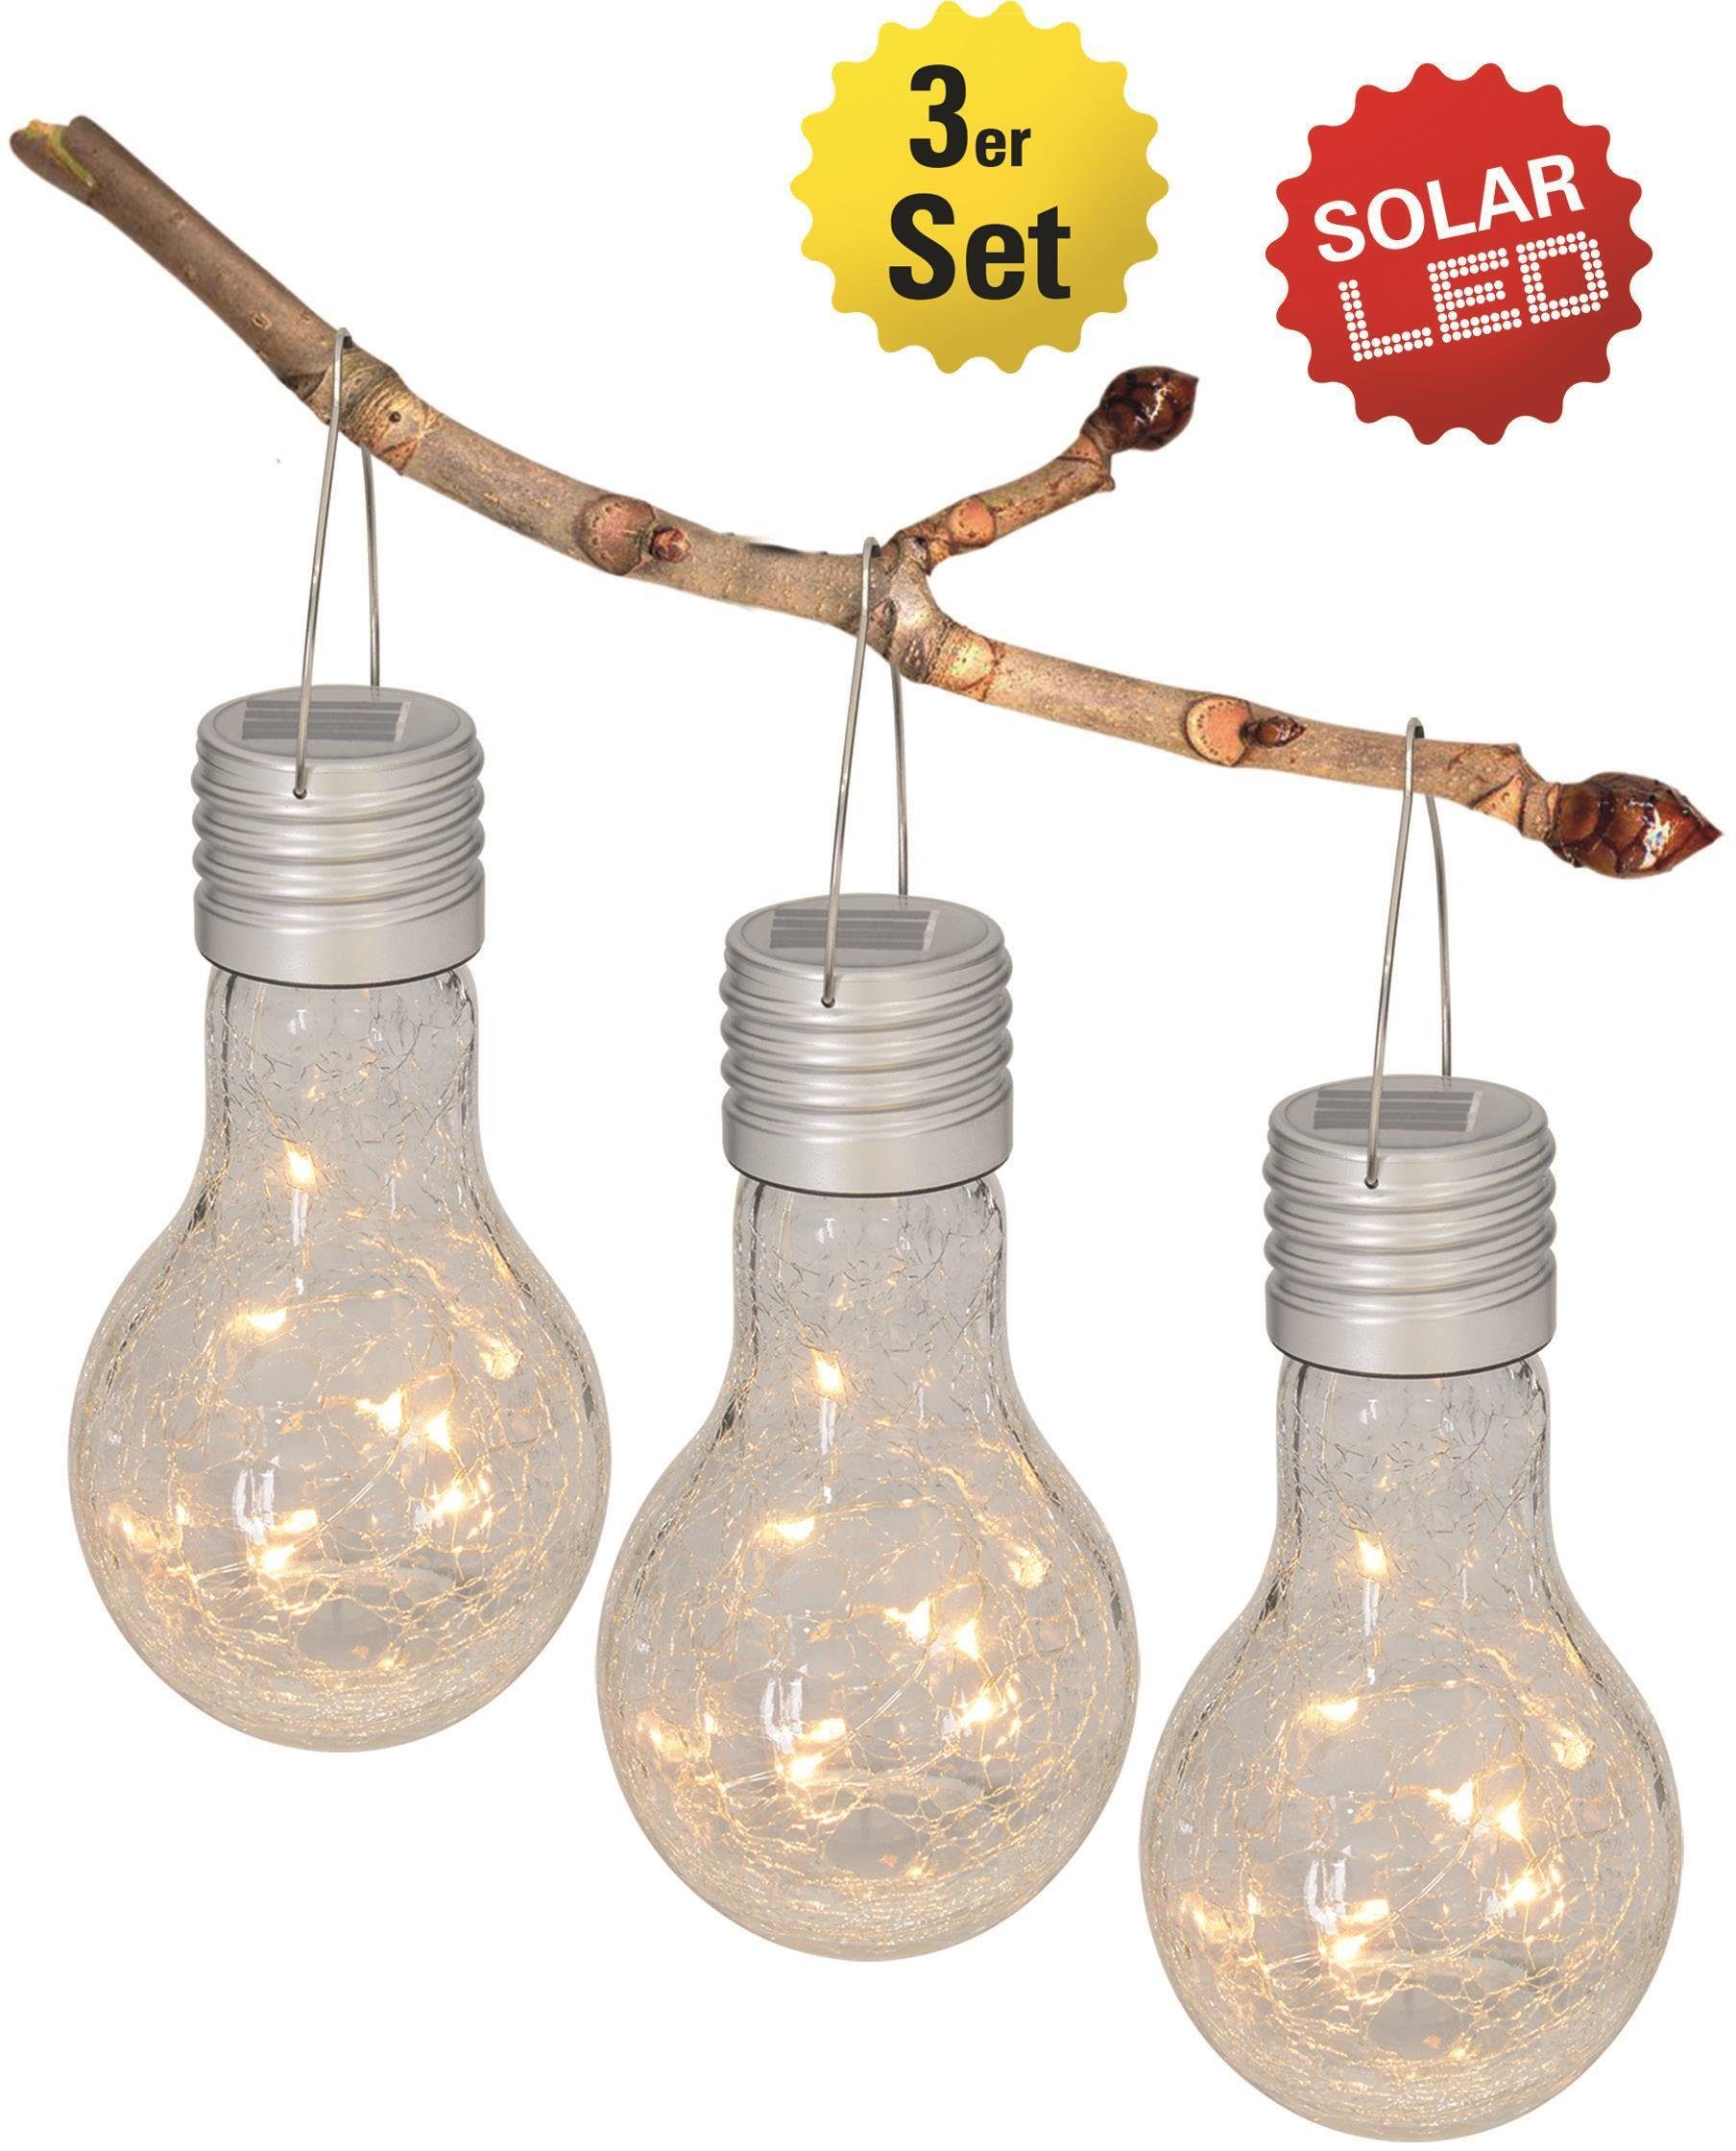 Warmweiß, LED Material: fest Crackle Set Farbe: klar, Aufhängemöglichkeit, LED Bulb, näve integriert, Gartenleuchte 3er Glas,